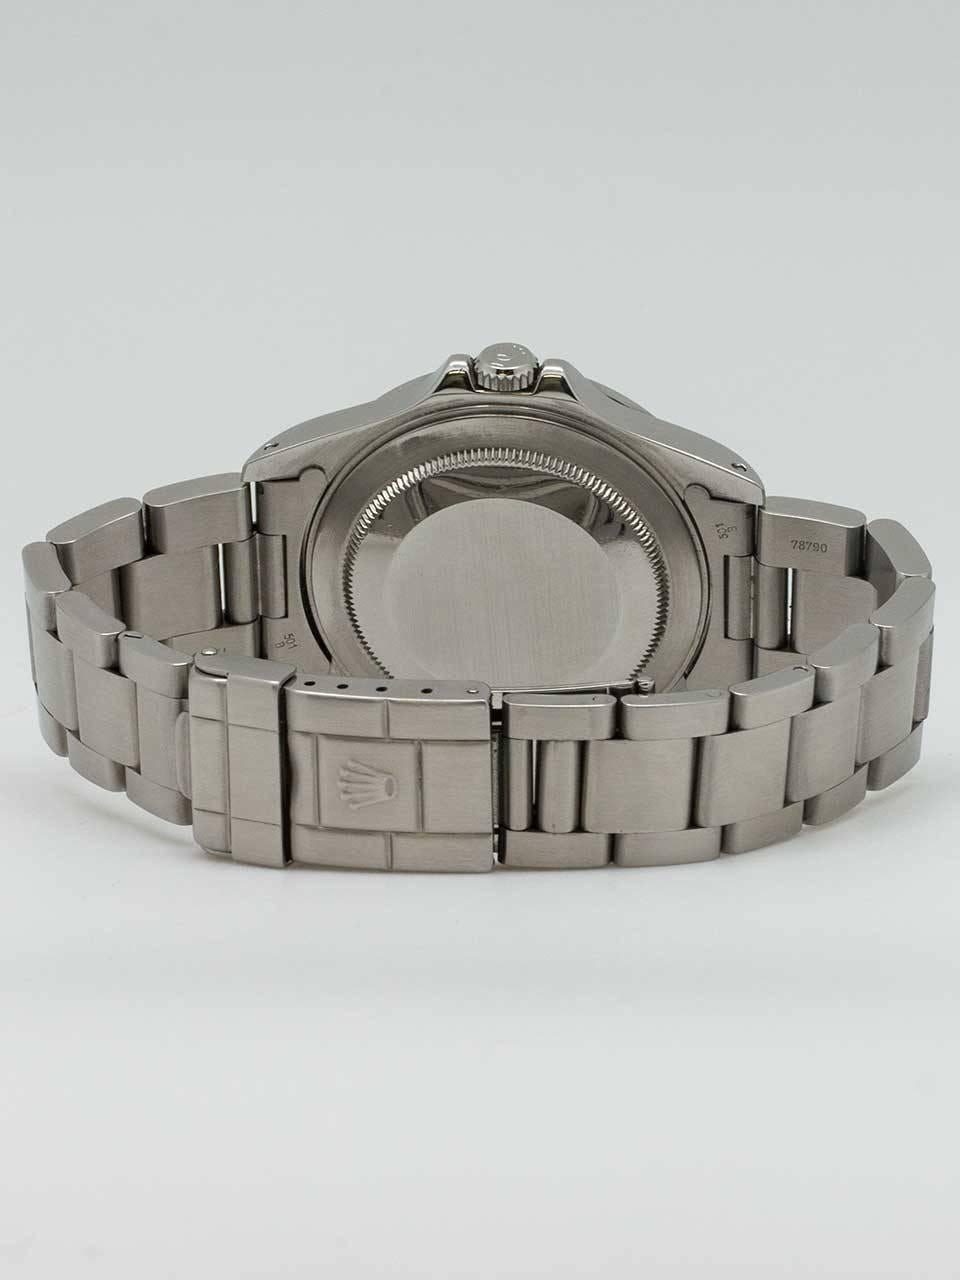 Men's Rolex Stainless Steel Explorer II Wristwatch Ref 16570